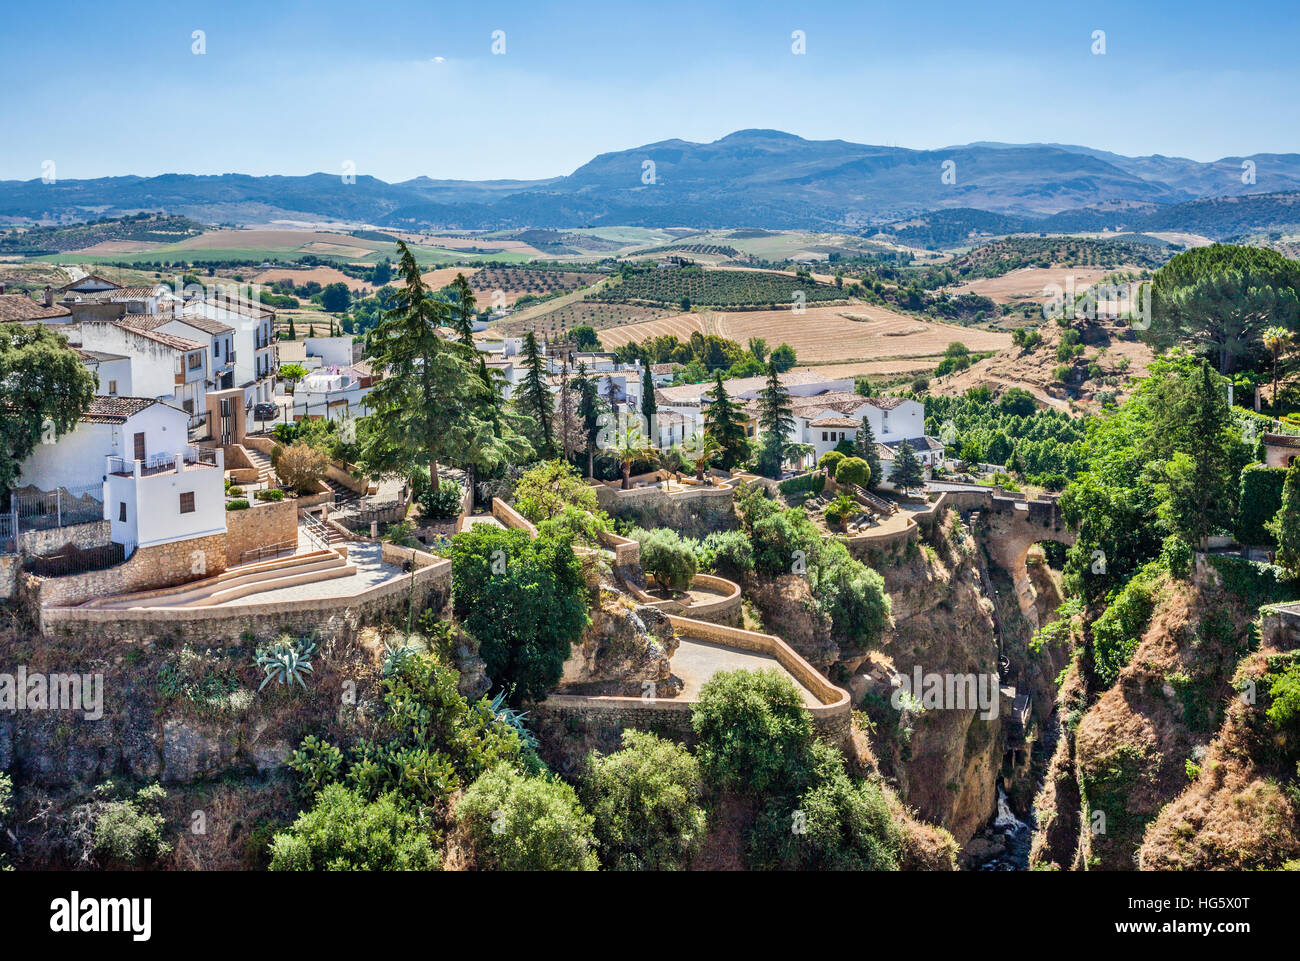 Spain, Andalusia, Province of Malaga, Ronda, view of the El Tajo Gorge and Rio Guadalevin Stock Photo